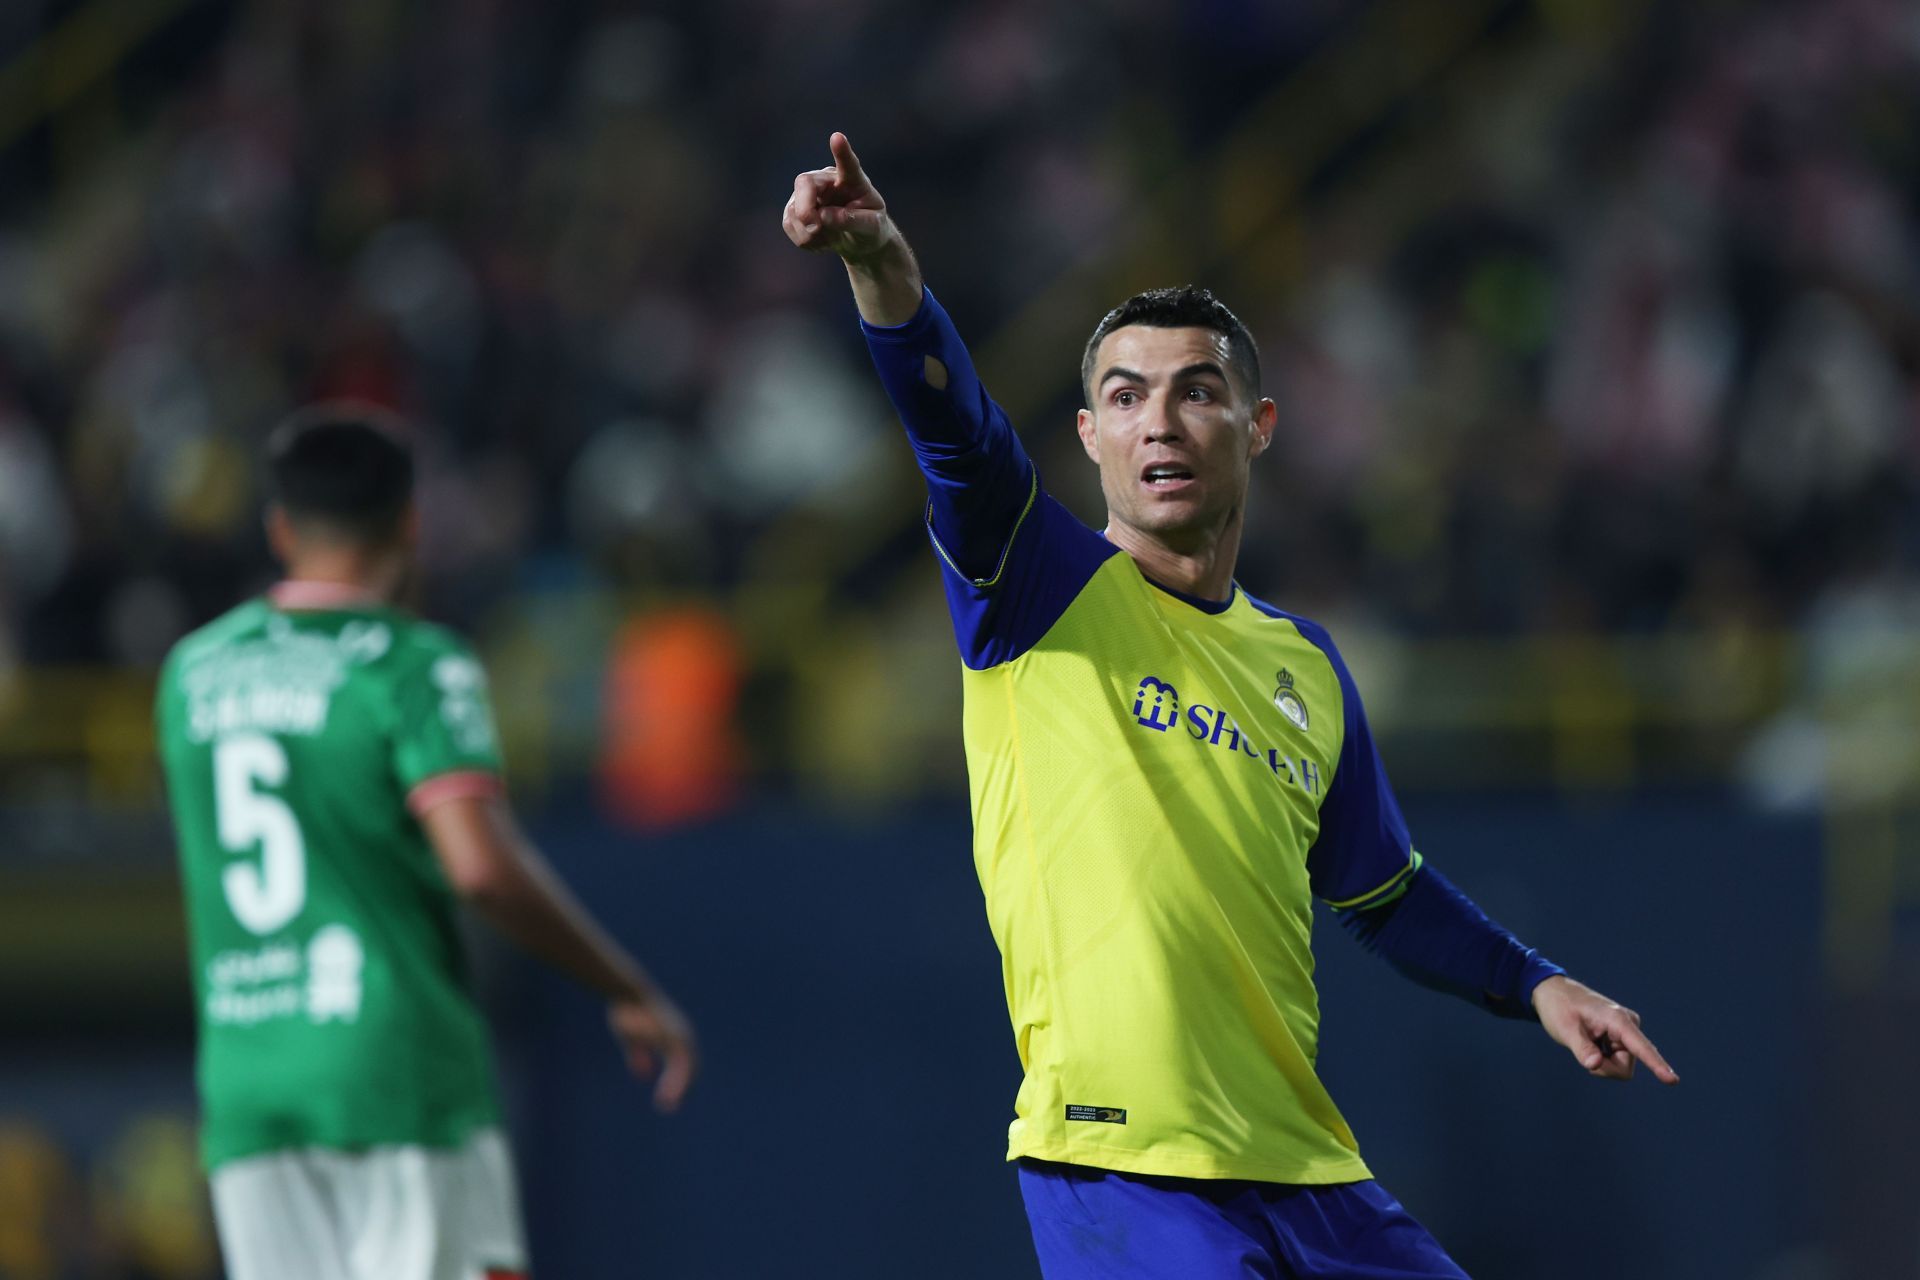 Cristiano Ronaldo attained legendary status at the Santiago Bernabeu.